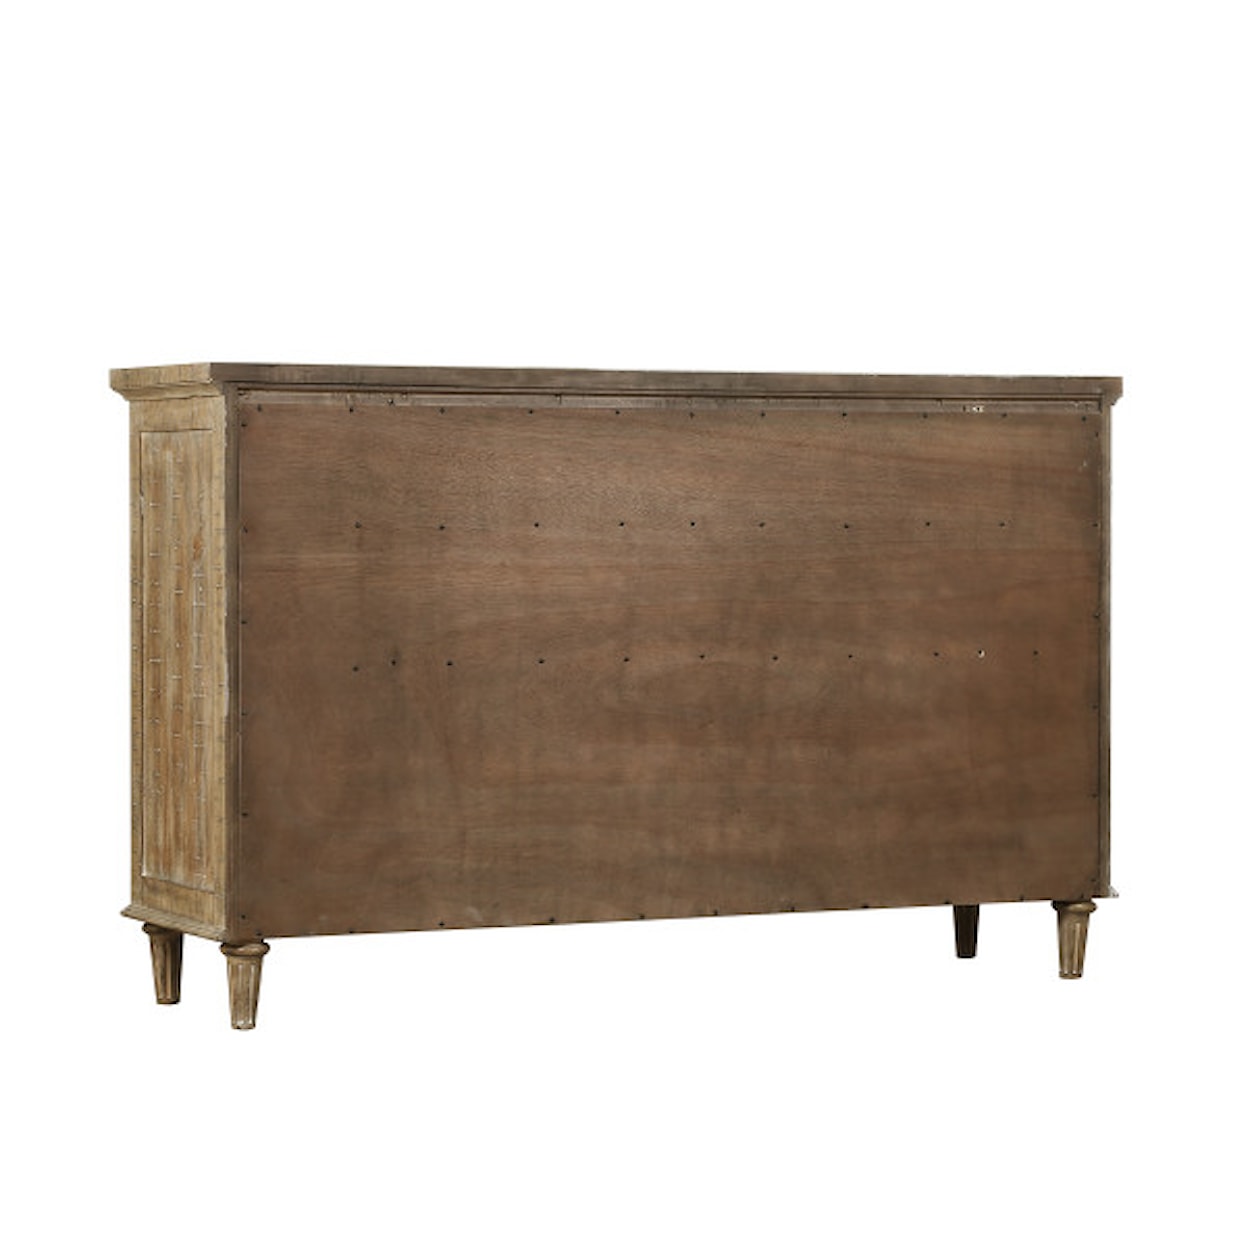 Emerald Interlude 6-Drawer Dresser with Sandstone Finish